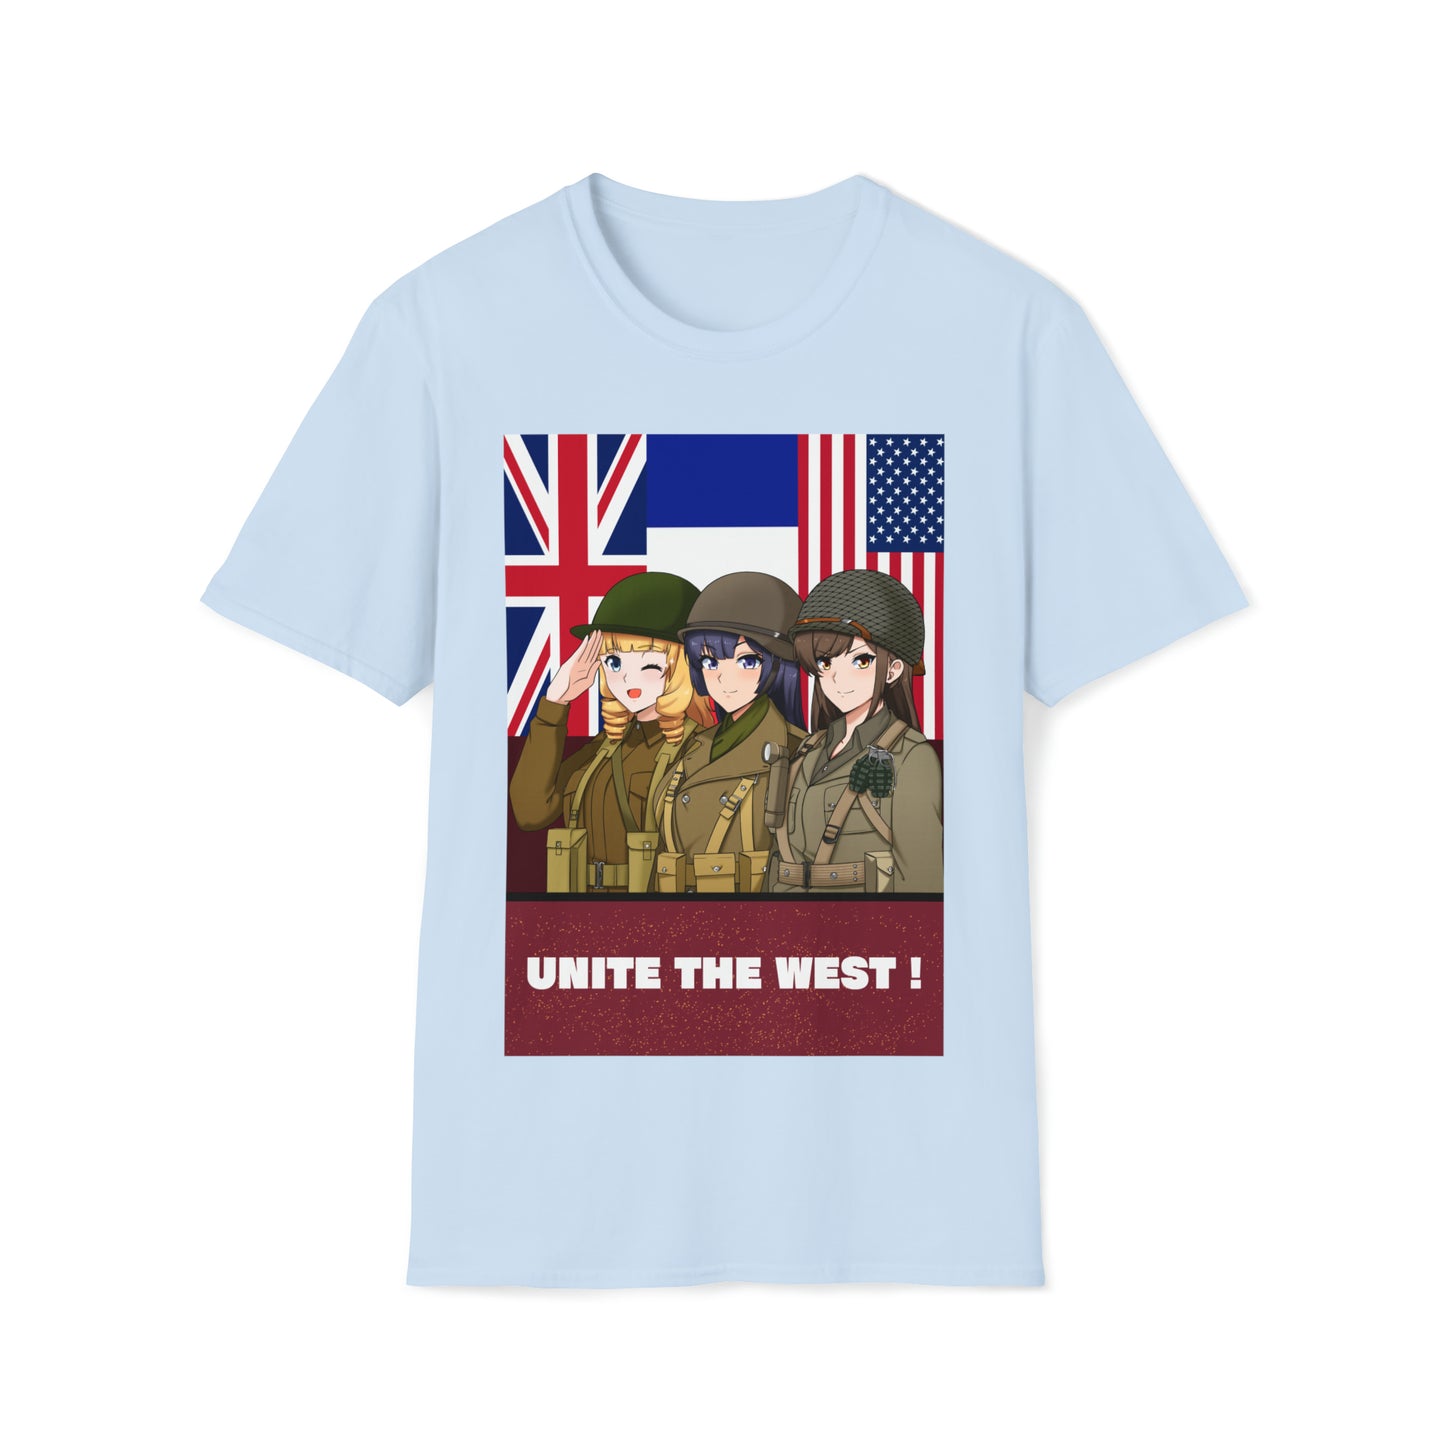 Unite the West Shirt